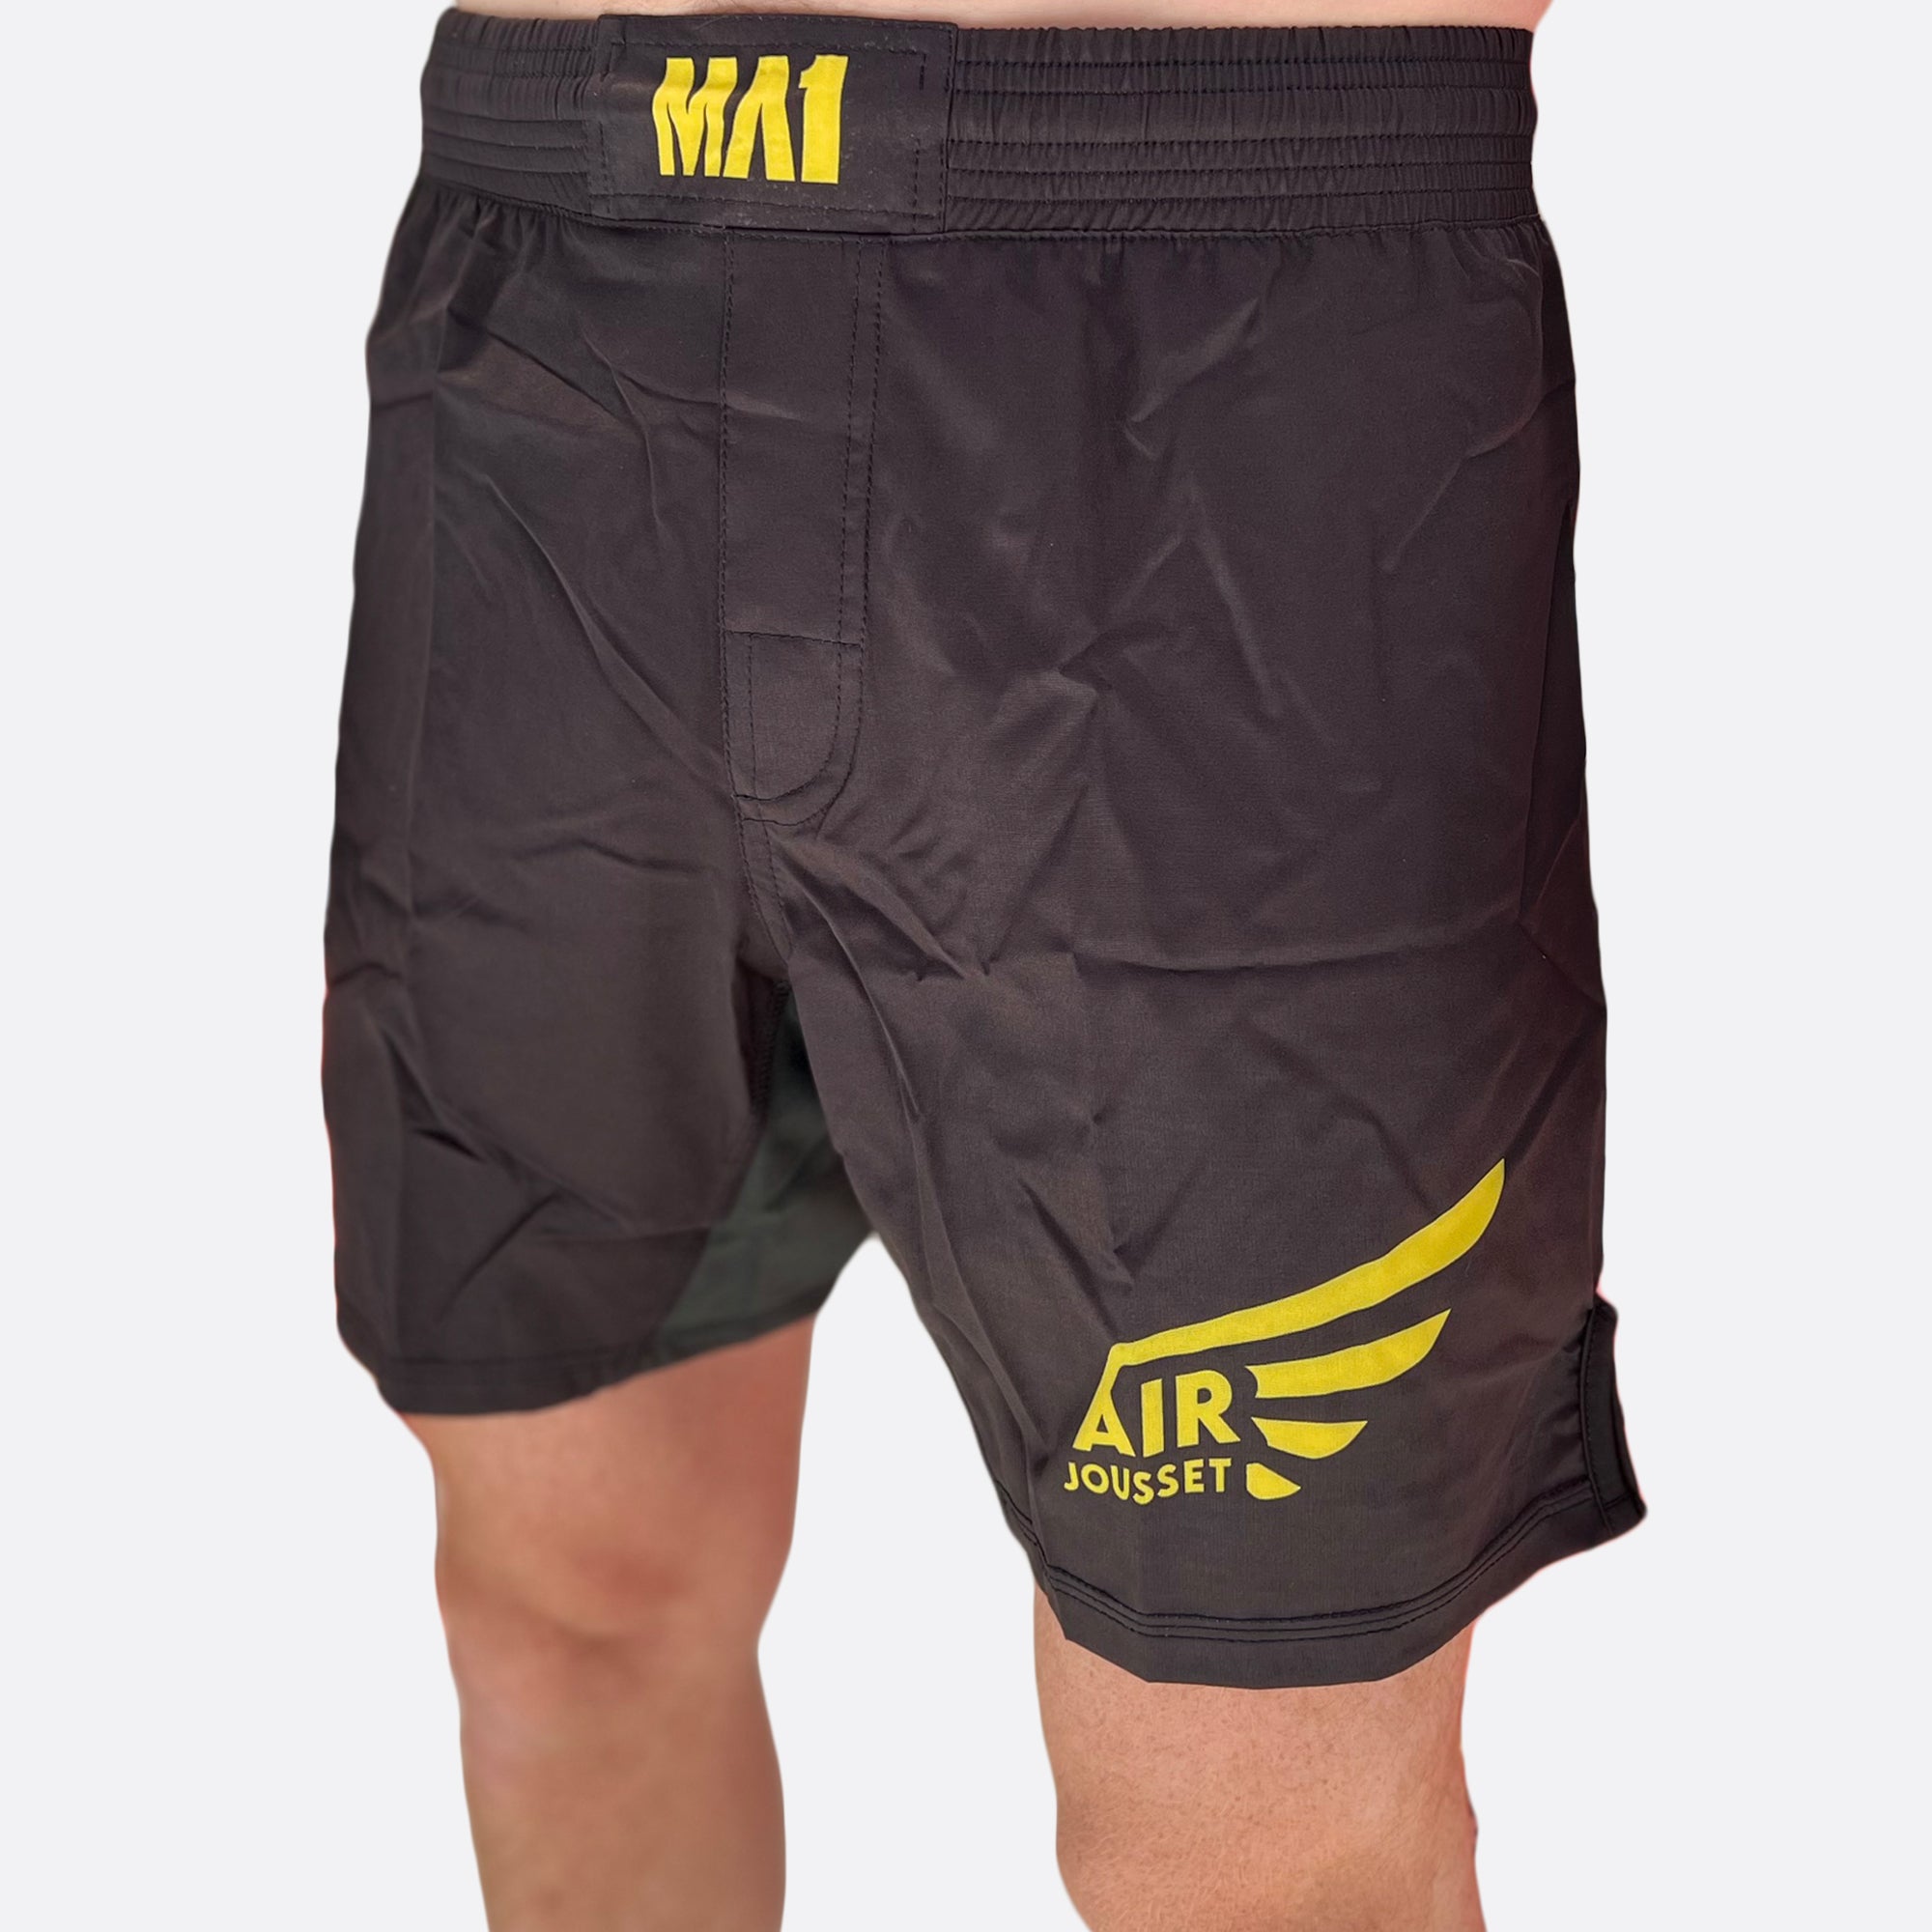 MA1 Kevin Air Jousset Basic Cut MMA Shorts